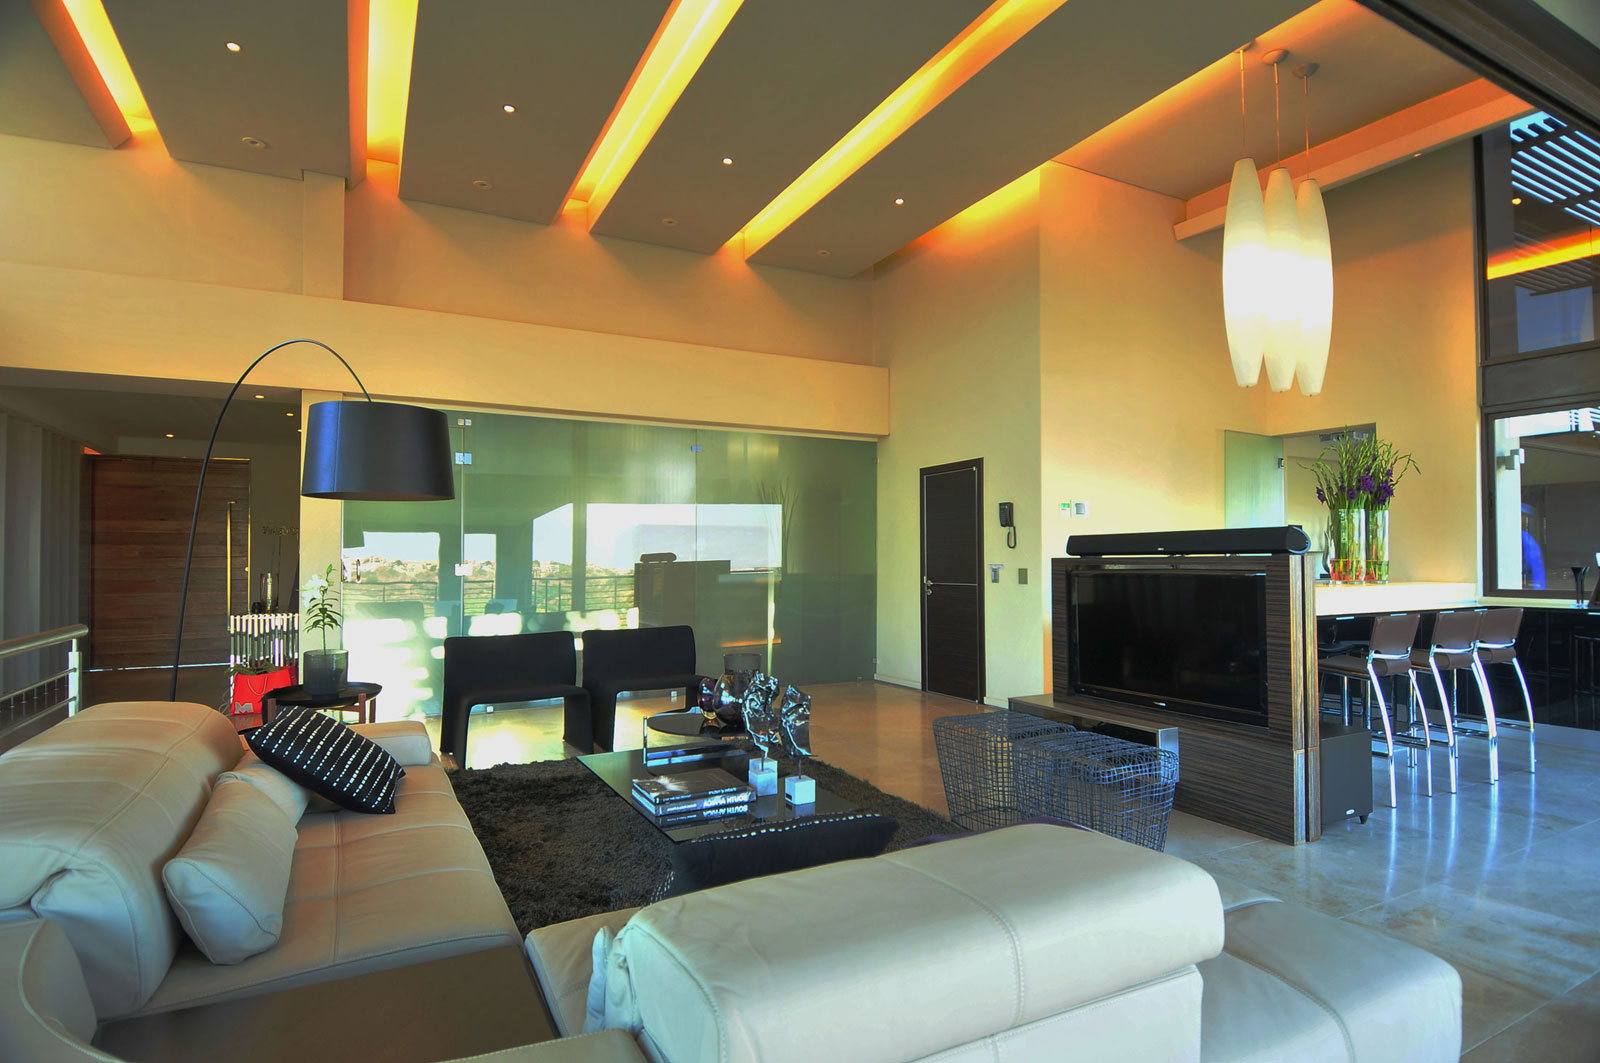 Living Room Lighting Ideas on a Budget | Roy Home Design